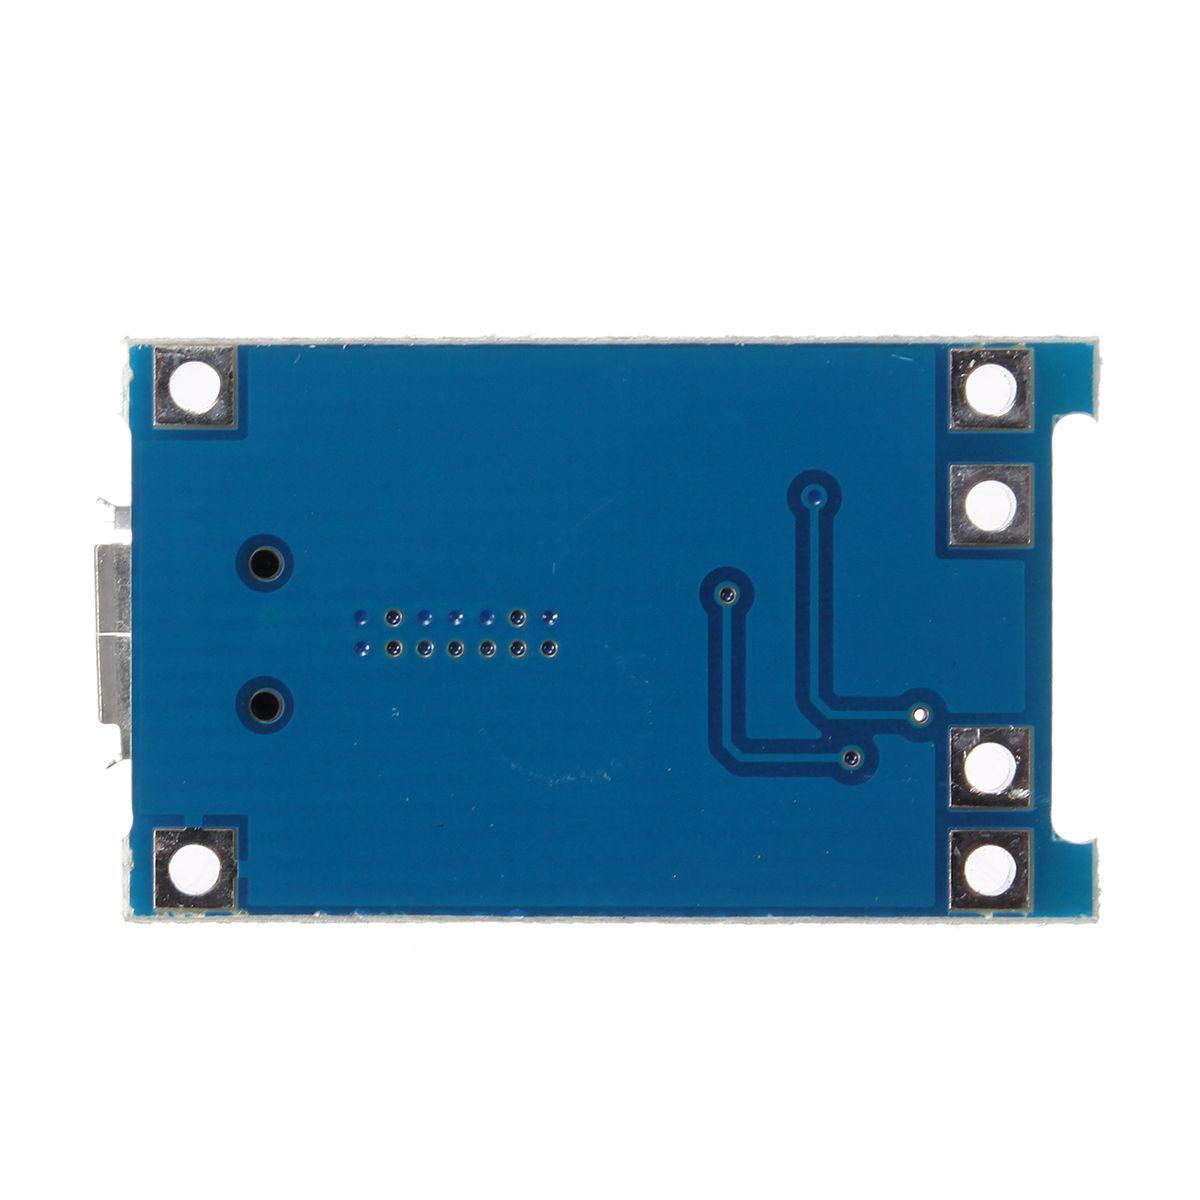 Geekcreitreg-Micro-USB-37v-36V-42V-1A-18650-TP4056-Lithium-Battery-Charger-Module-Charging-Board-Li--1633310